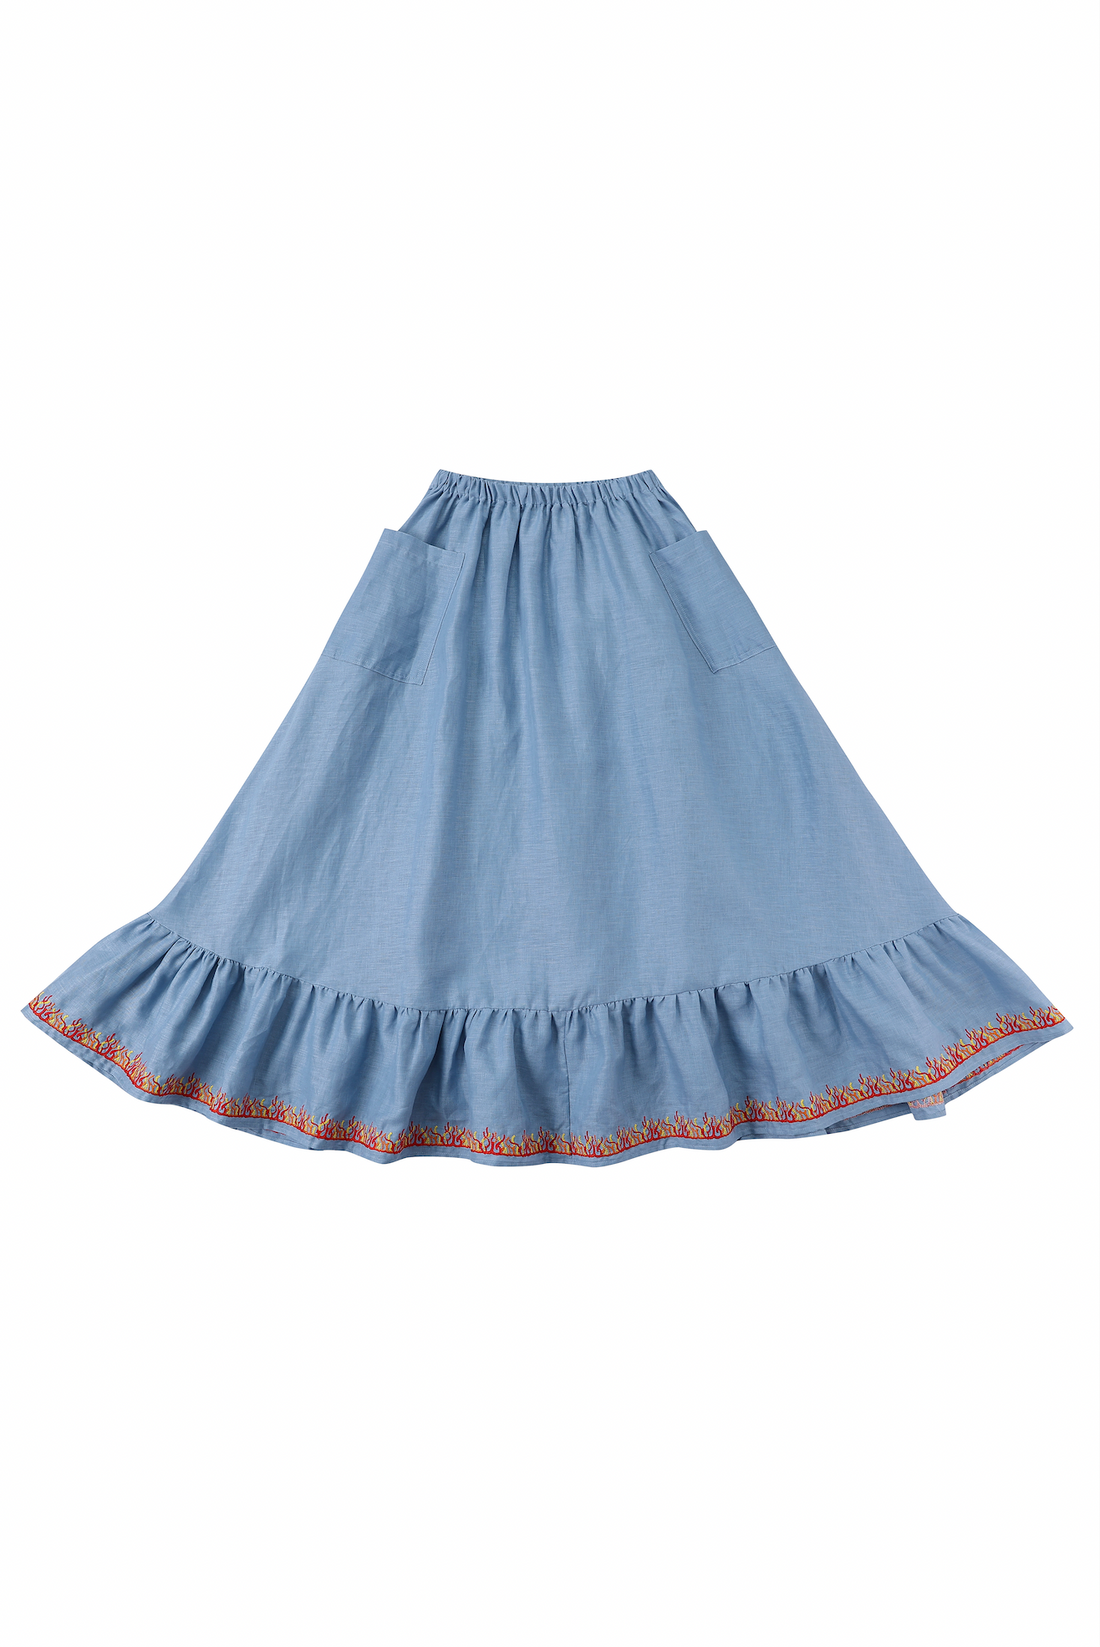 Flaming Light Blue Petticoat Skirt